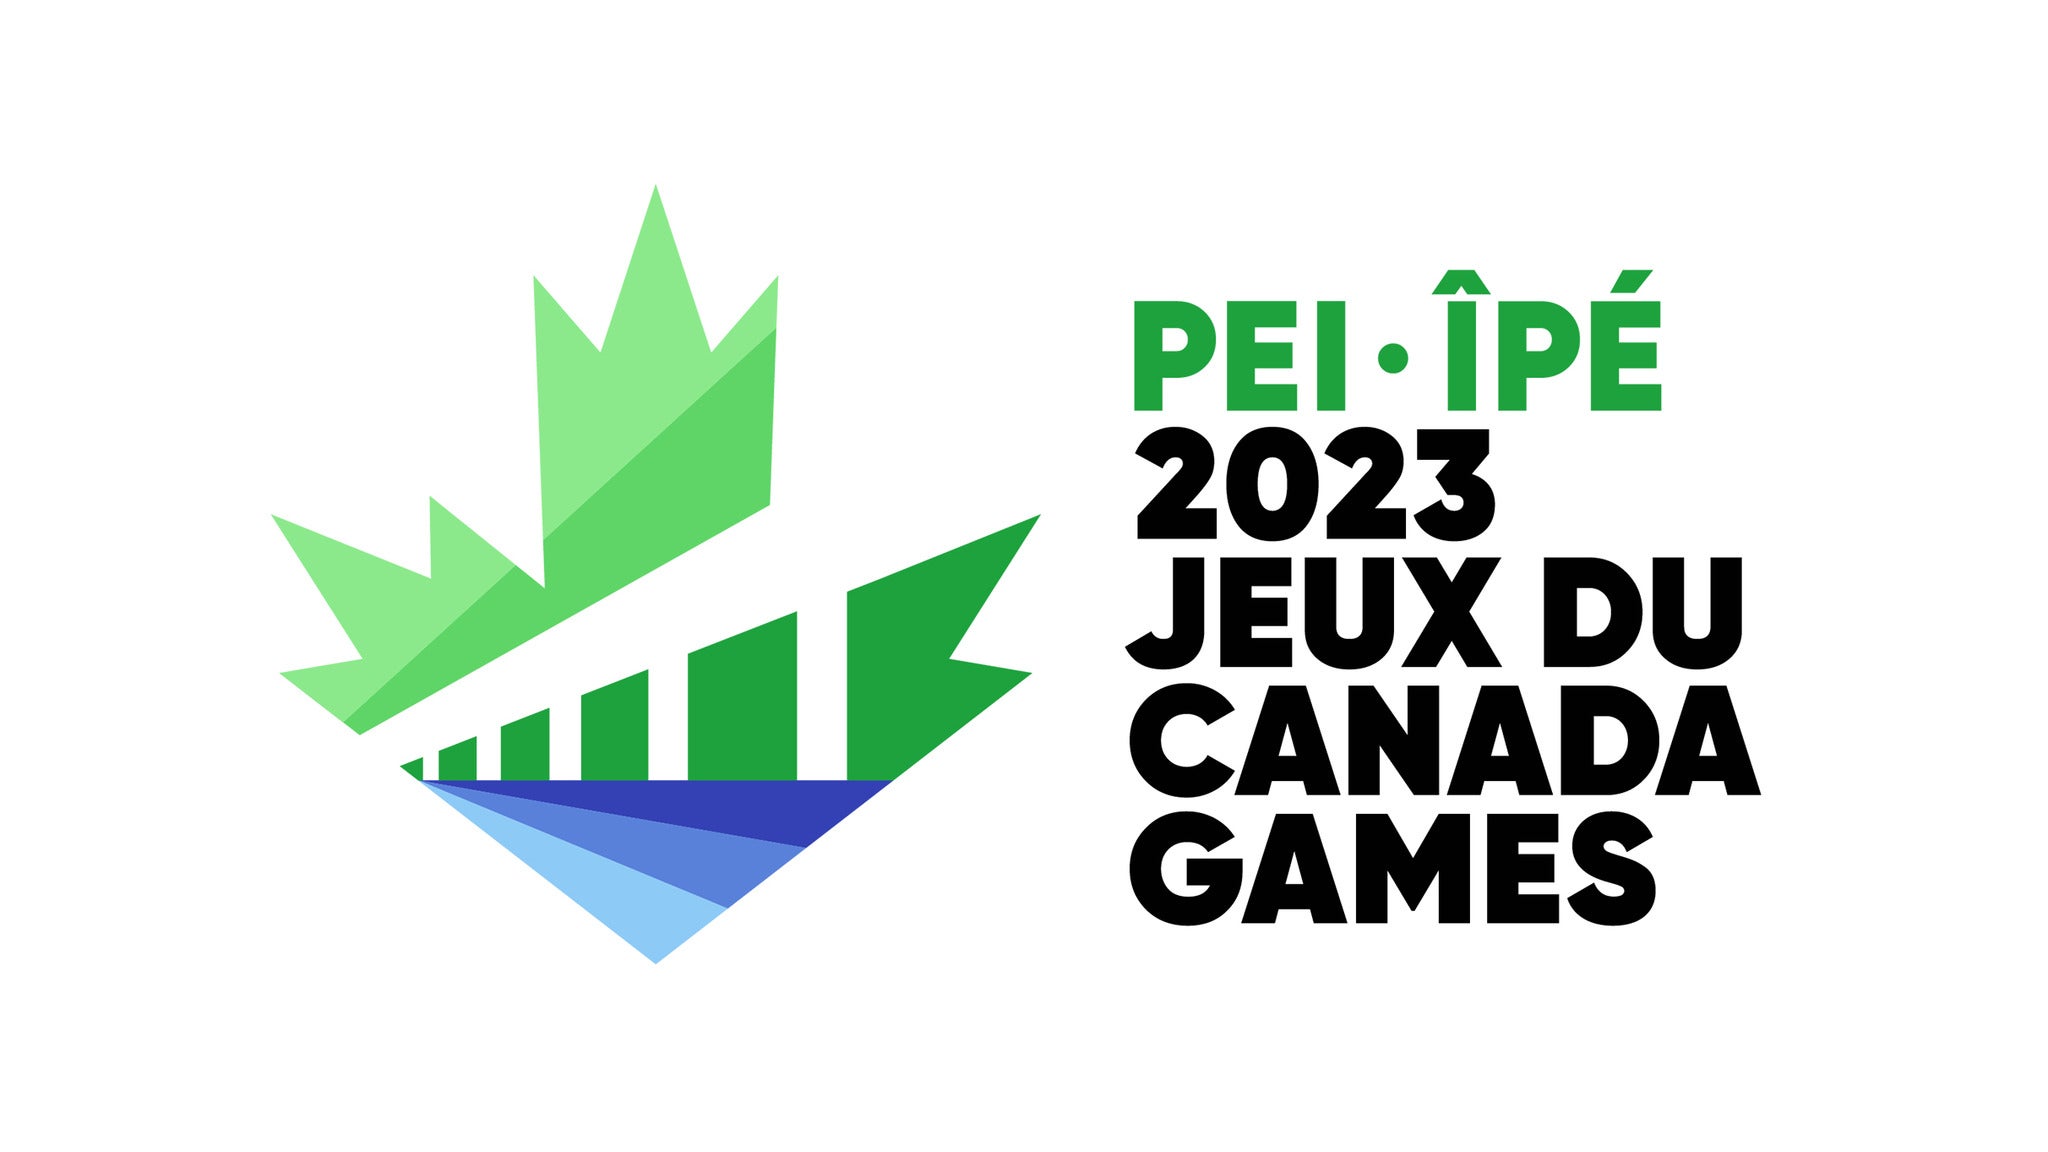 2023 Jeux du Canada Games - Feb 22 Single Day Pass / Billet De Journée in Summerside promo photo for Offer presale offer code